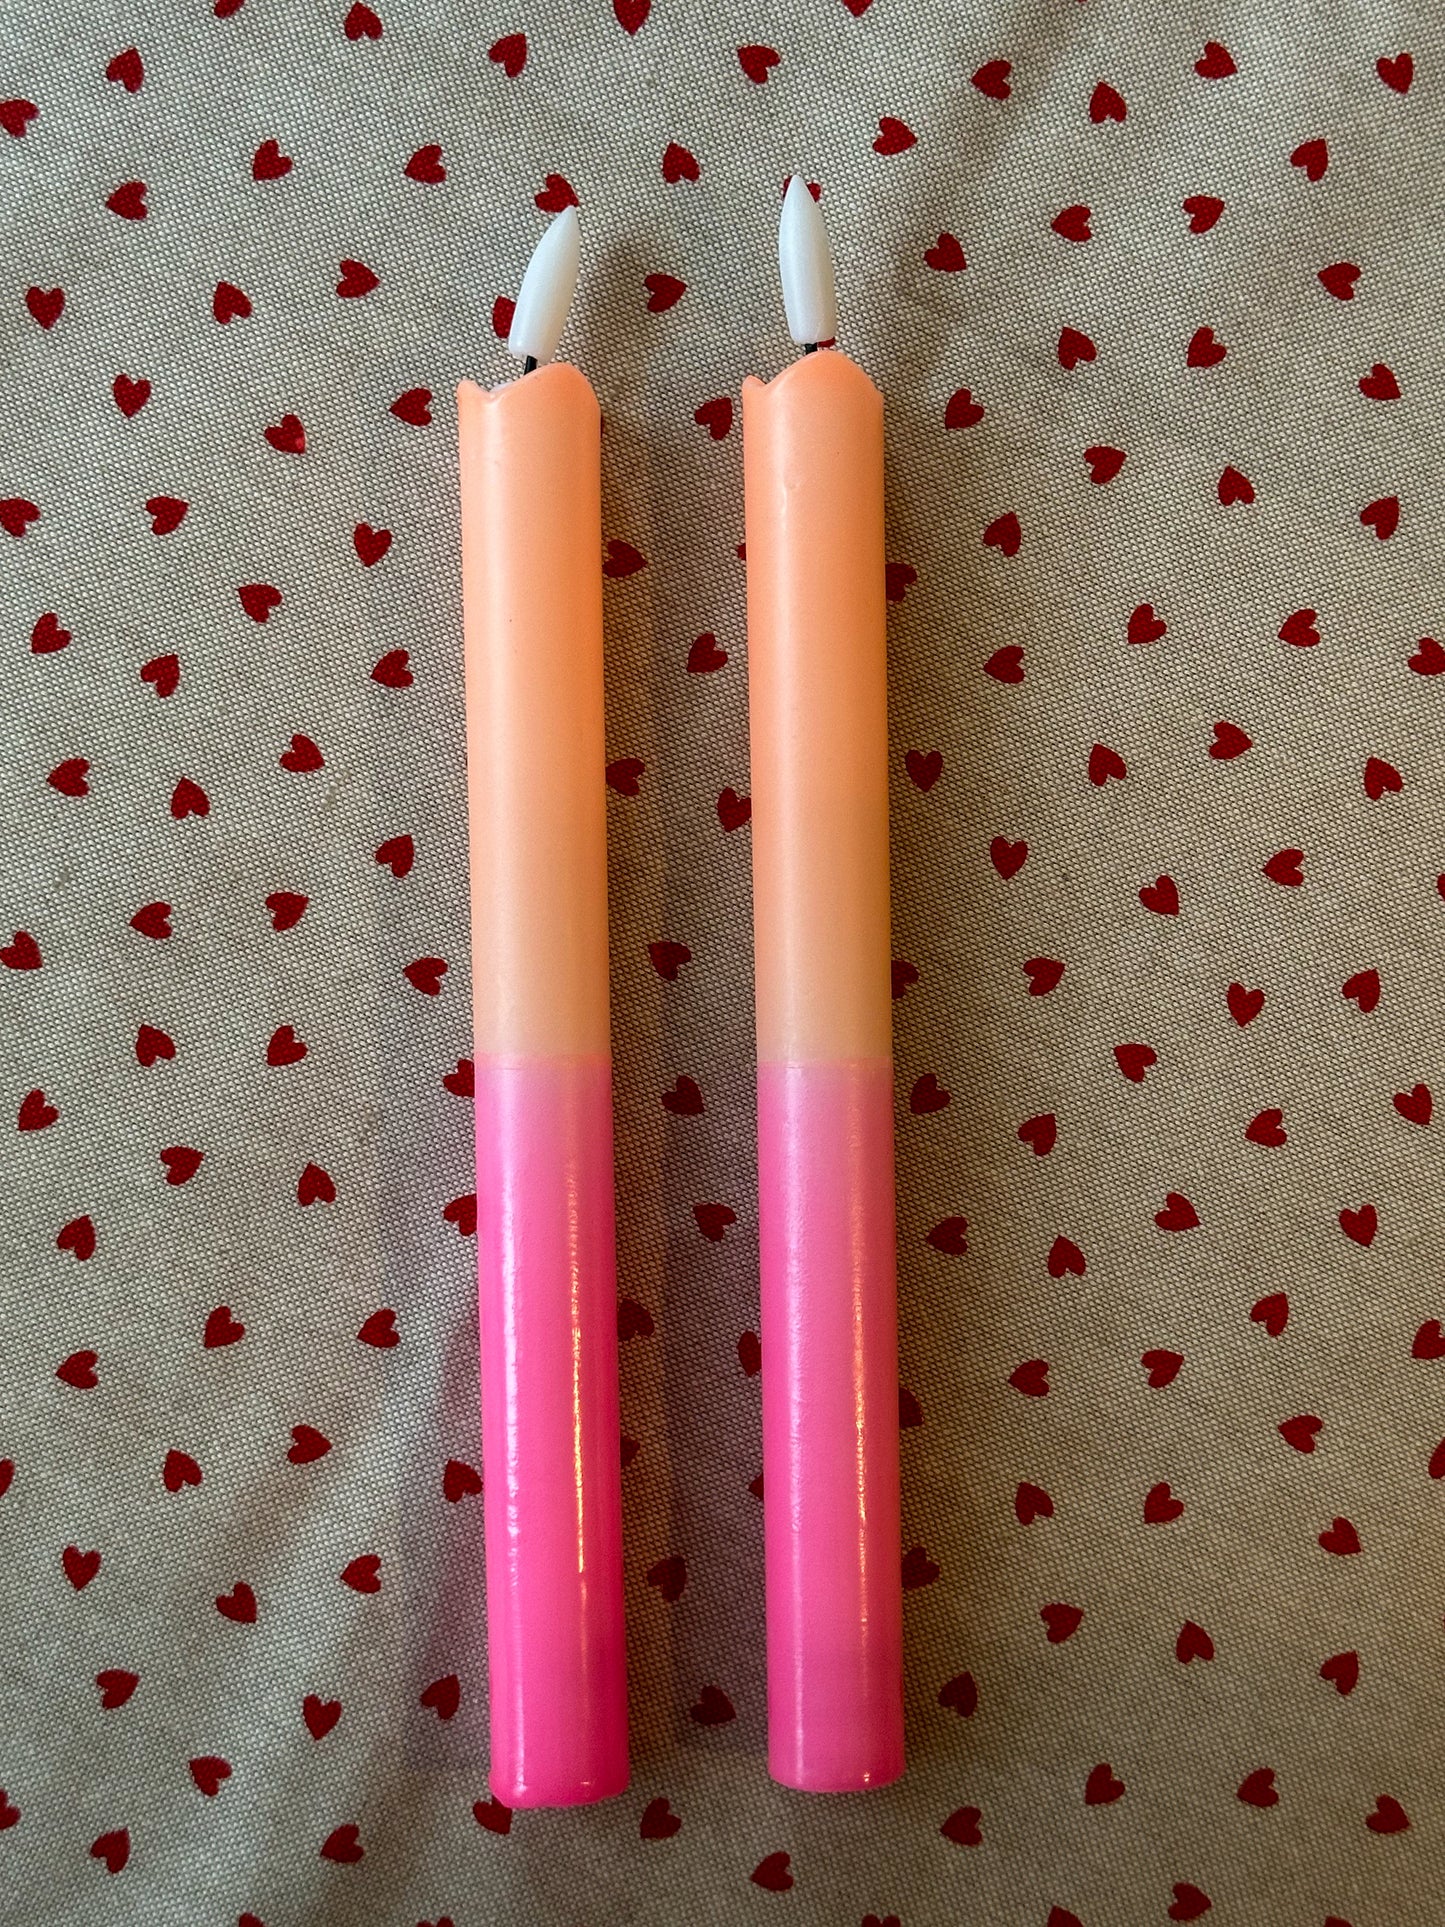 LED Kaarsen dip dye oranje roze (2 stuks) - RUBY Conceptstore 